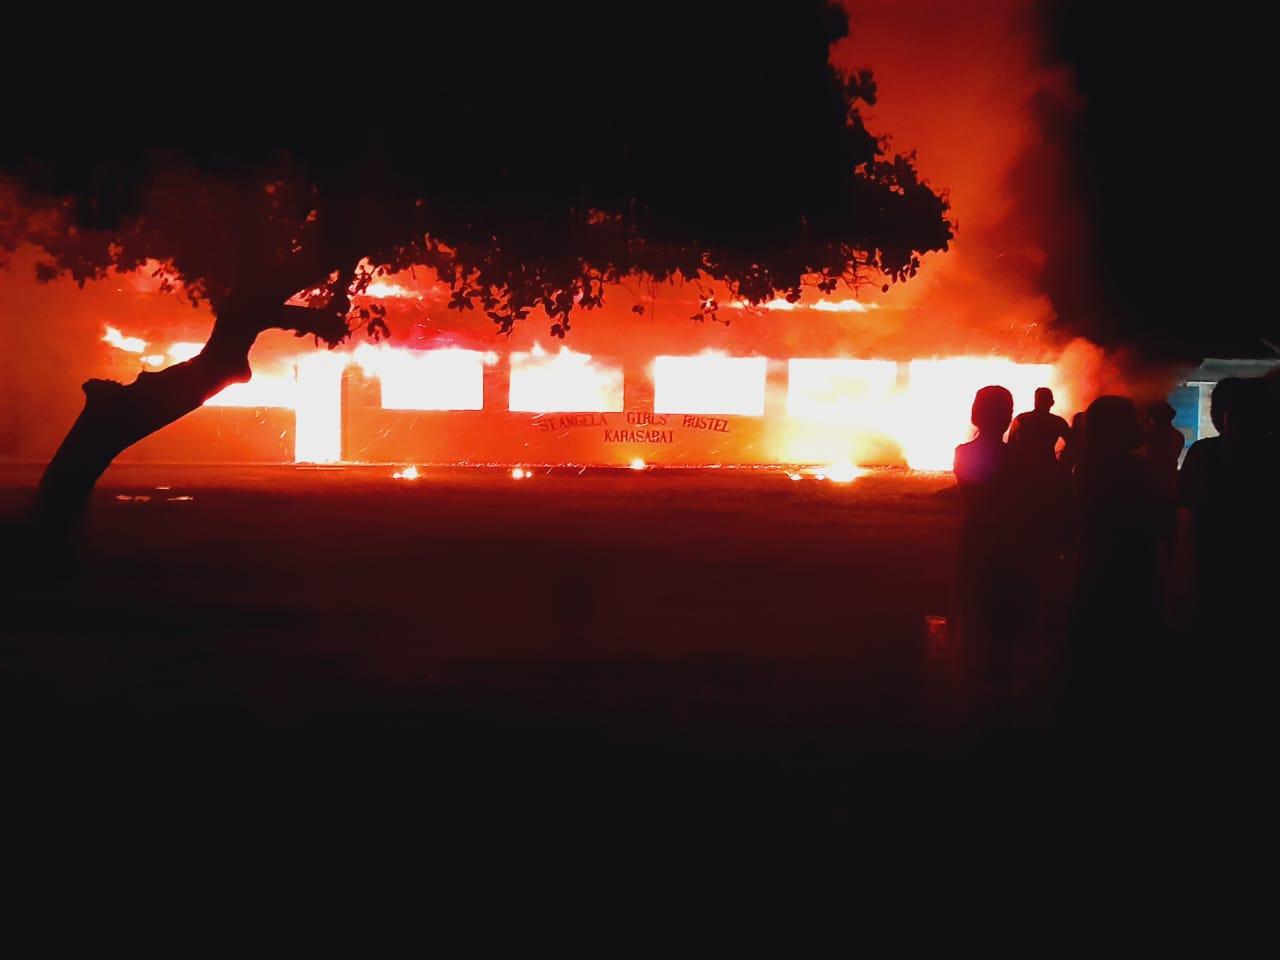 St. Angela girls’ hostel on fire